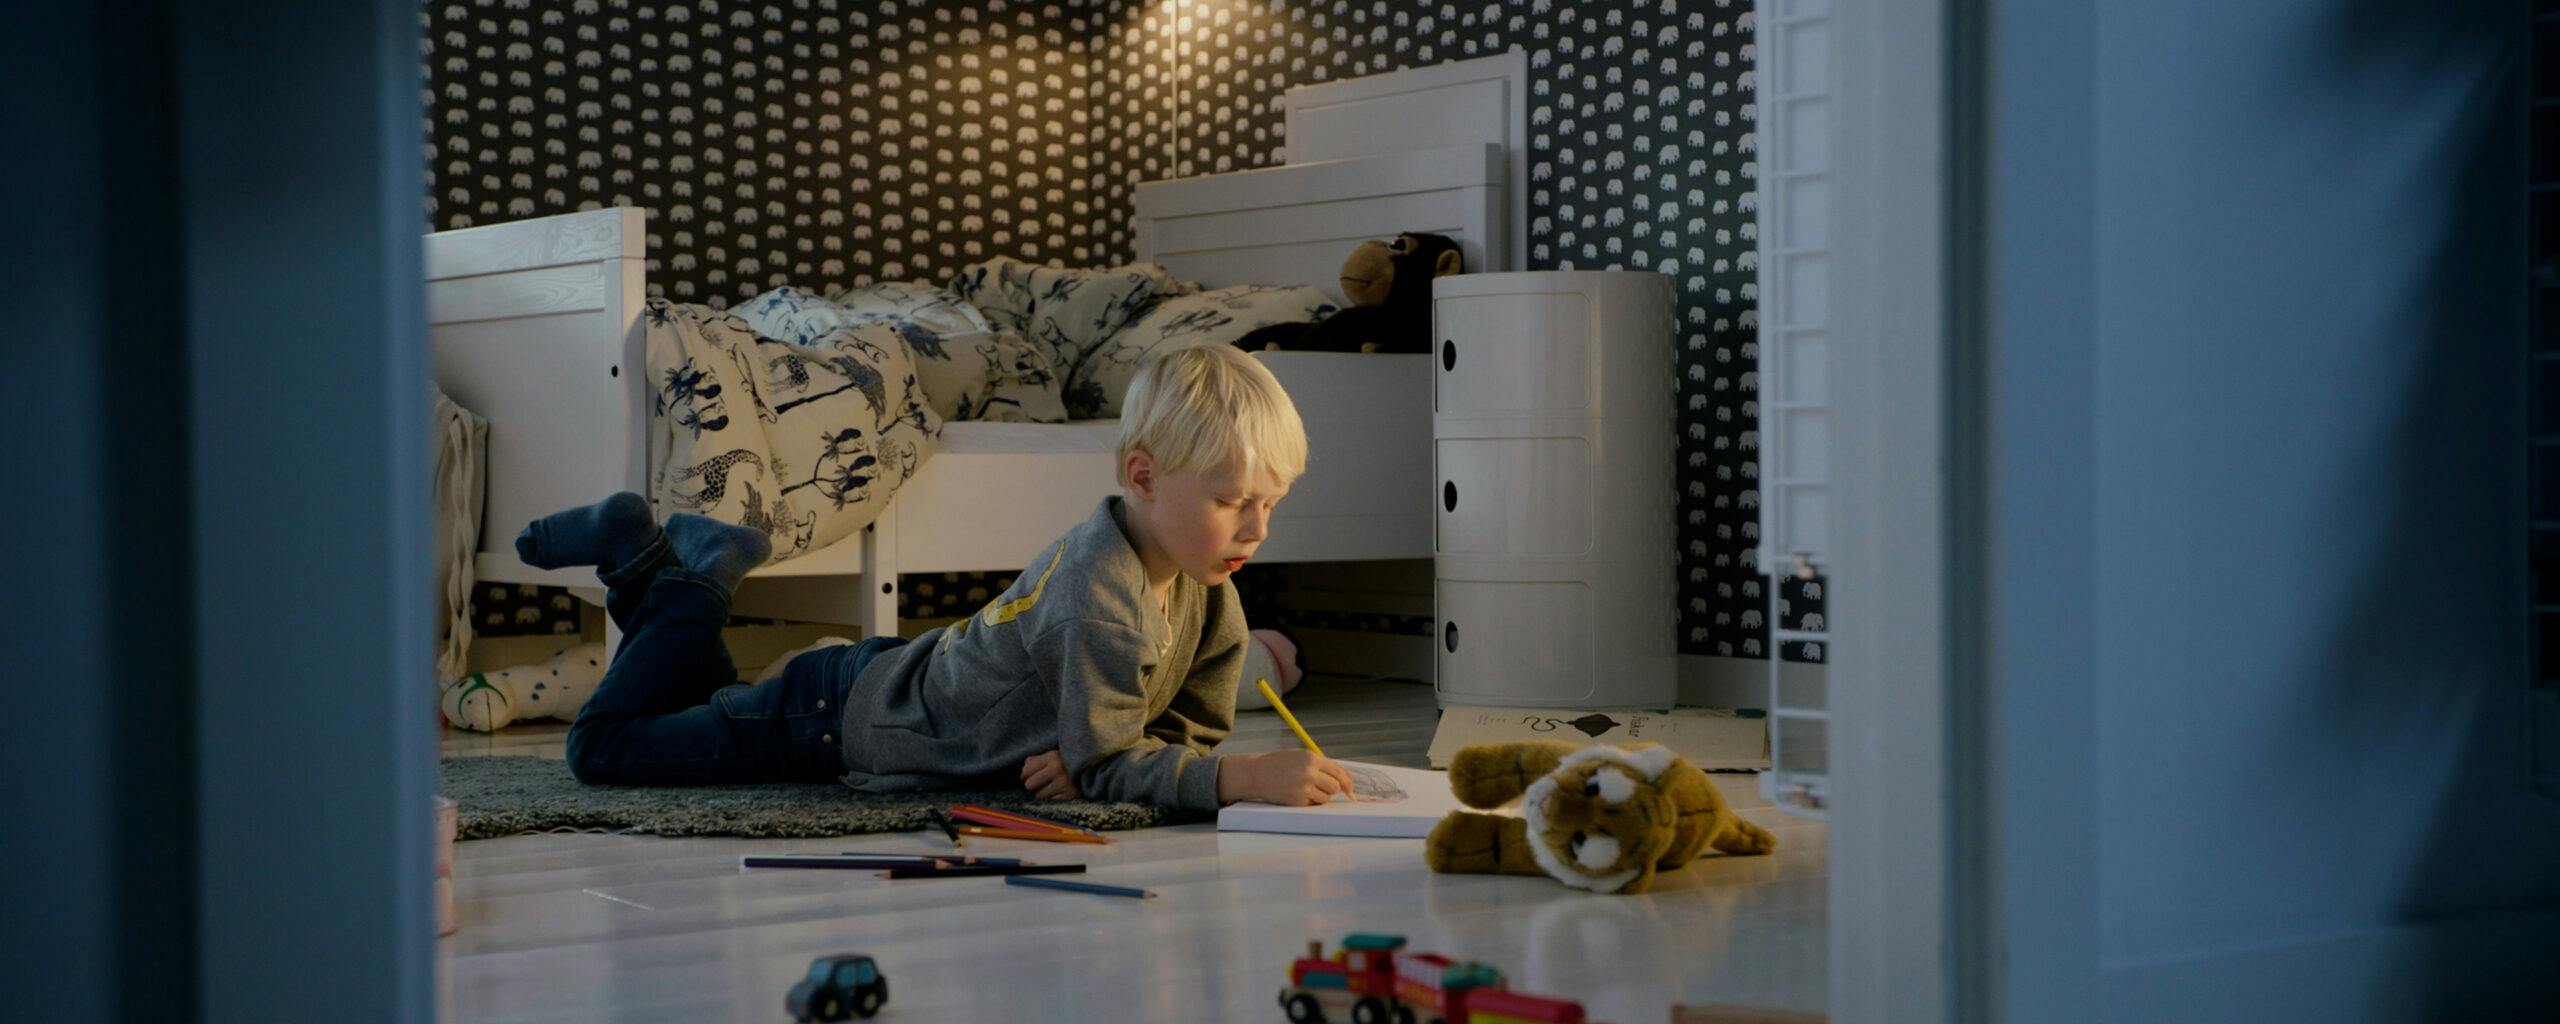 Målande pojke ligger på golvet i filmen "Pojken" för Nõberu of Sweden